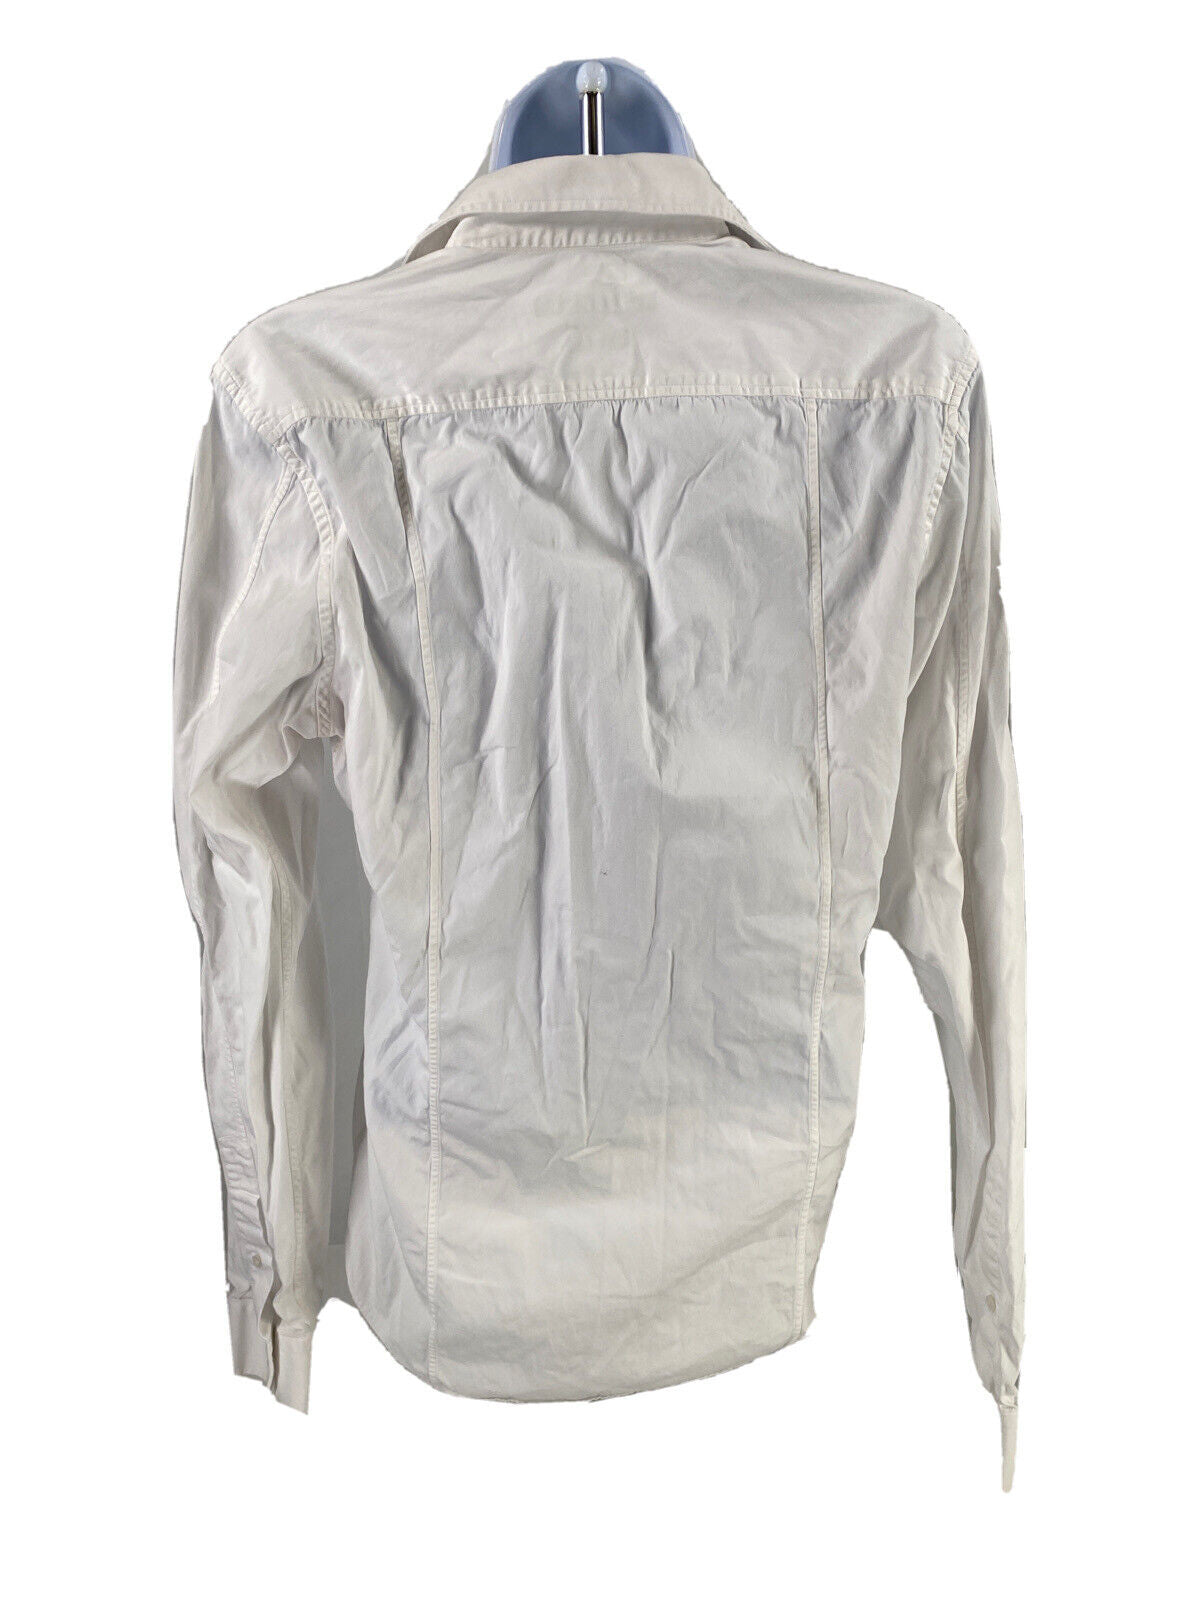 Gucci Women's White Slim Fit Long Sleeve Button Up Dress Shirt - 38/15